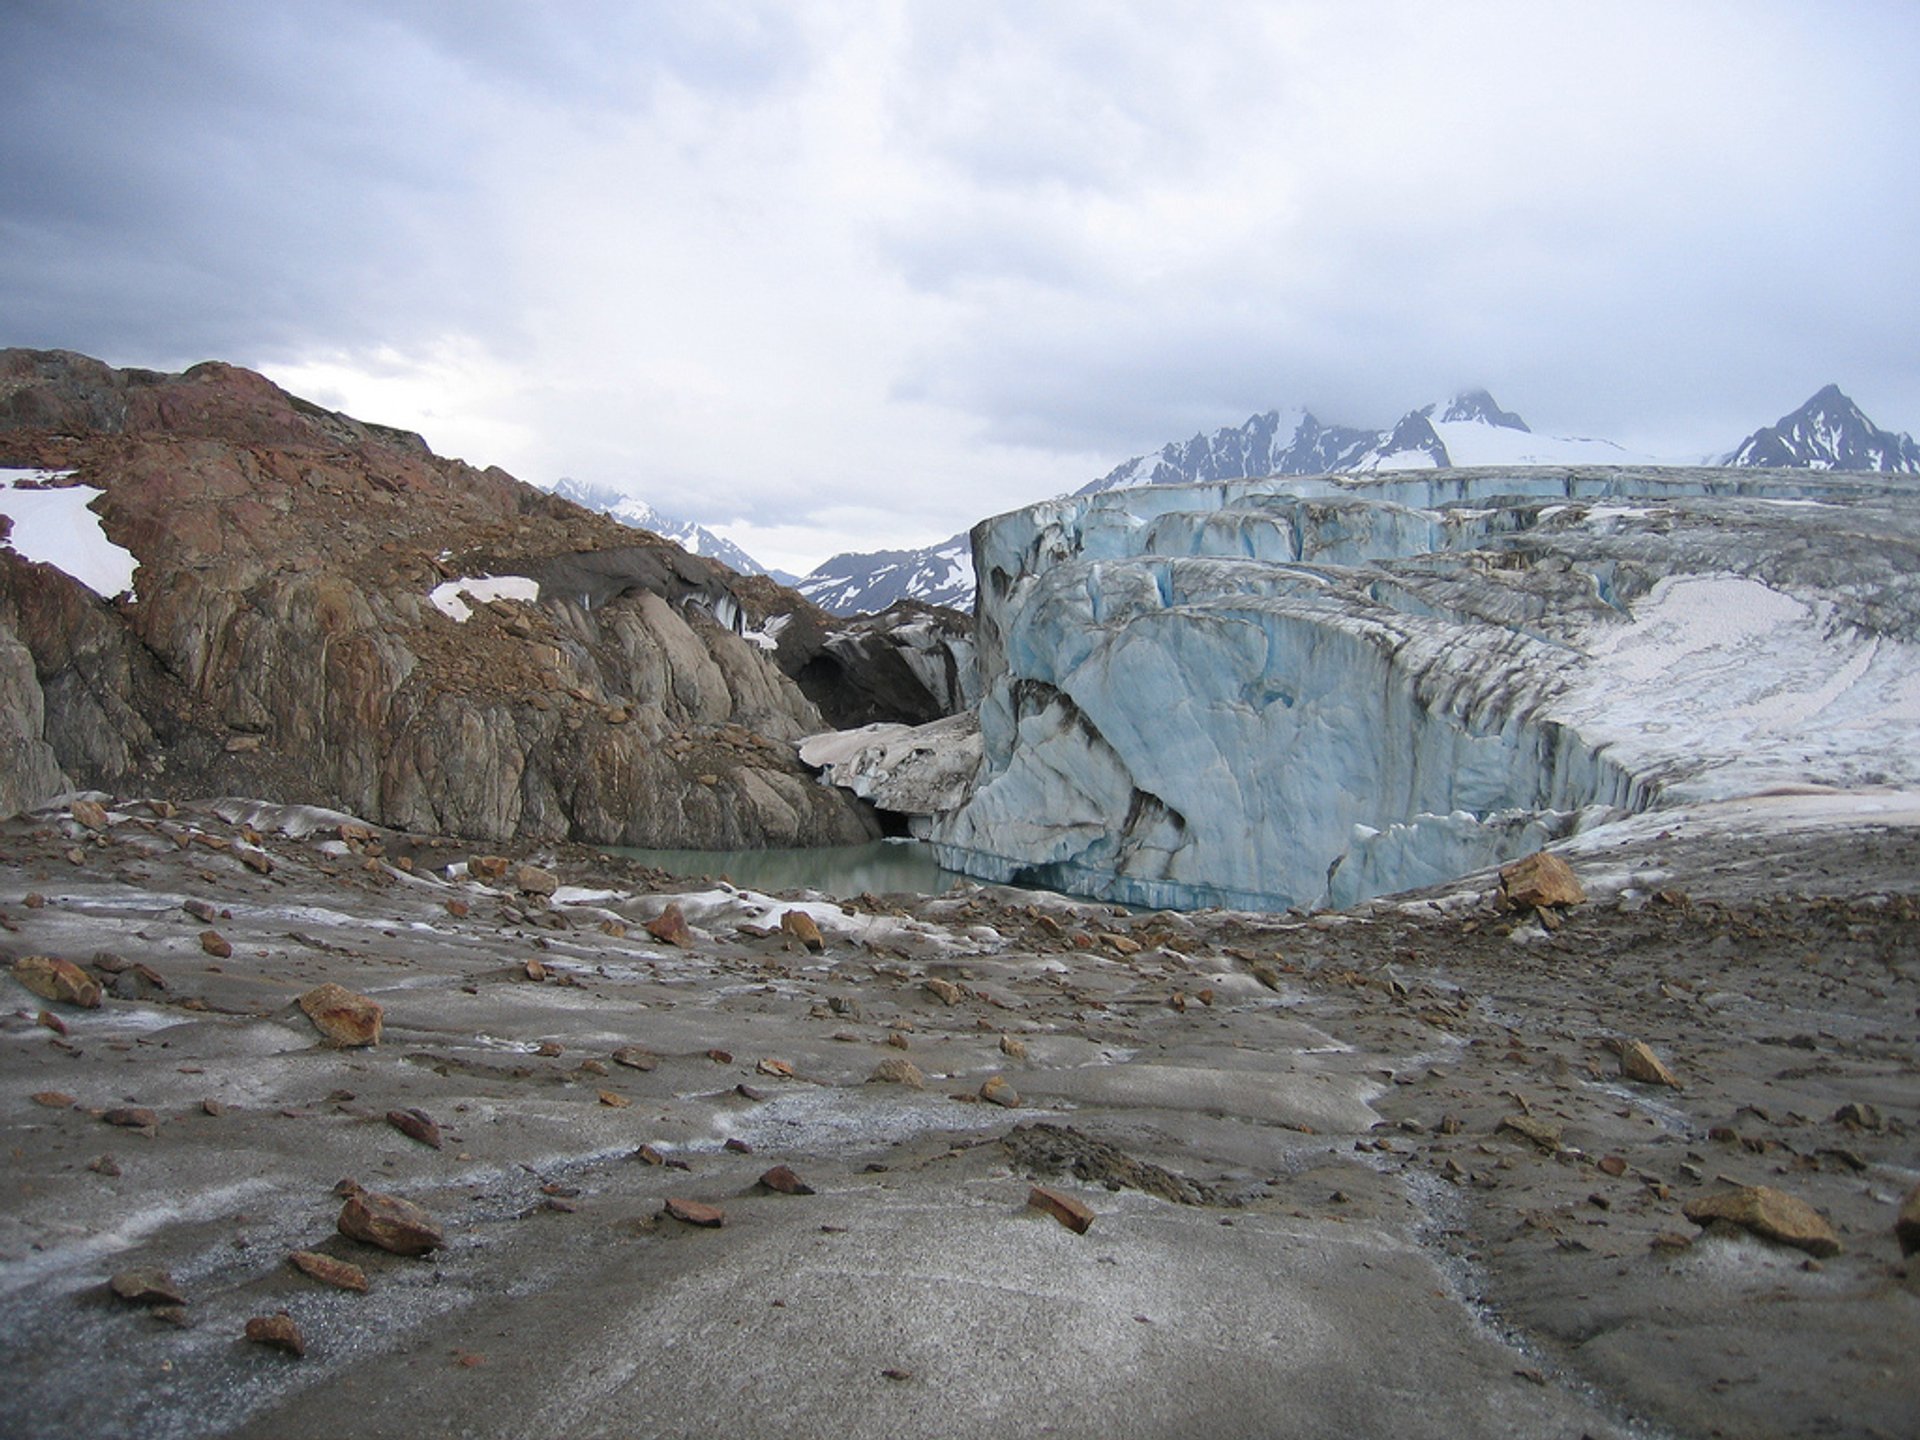 Tana Glacier at St. Ellias National Park